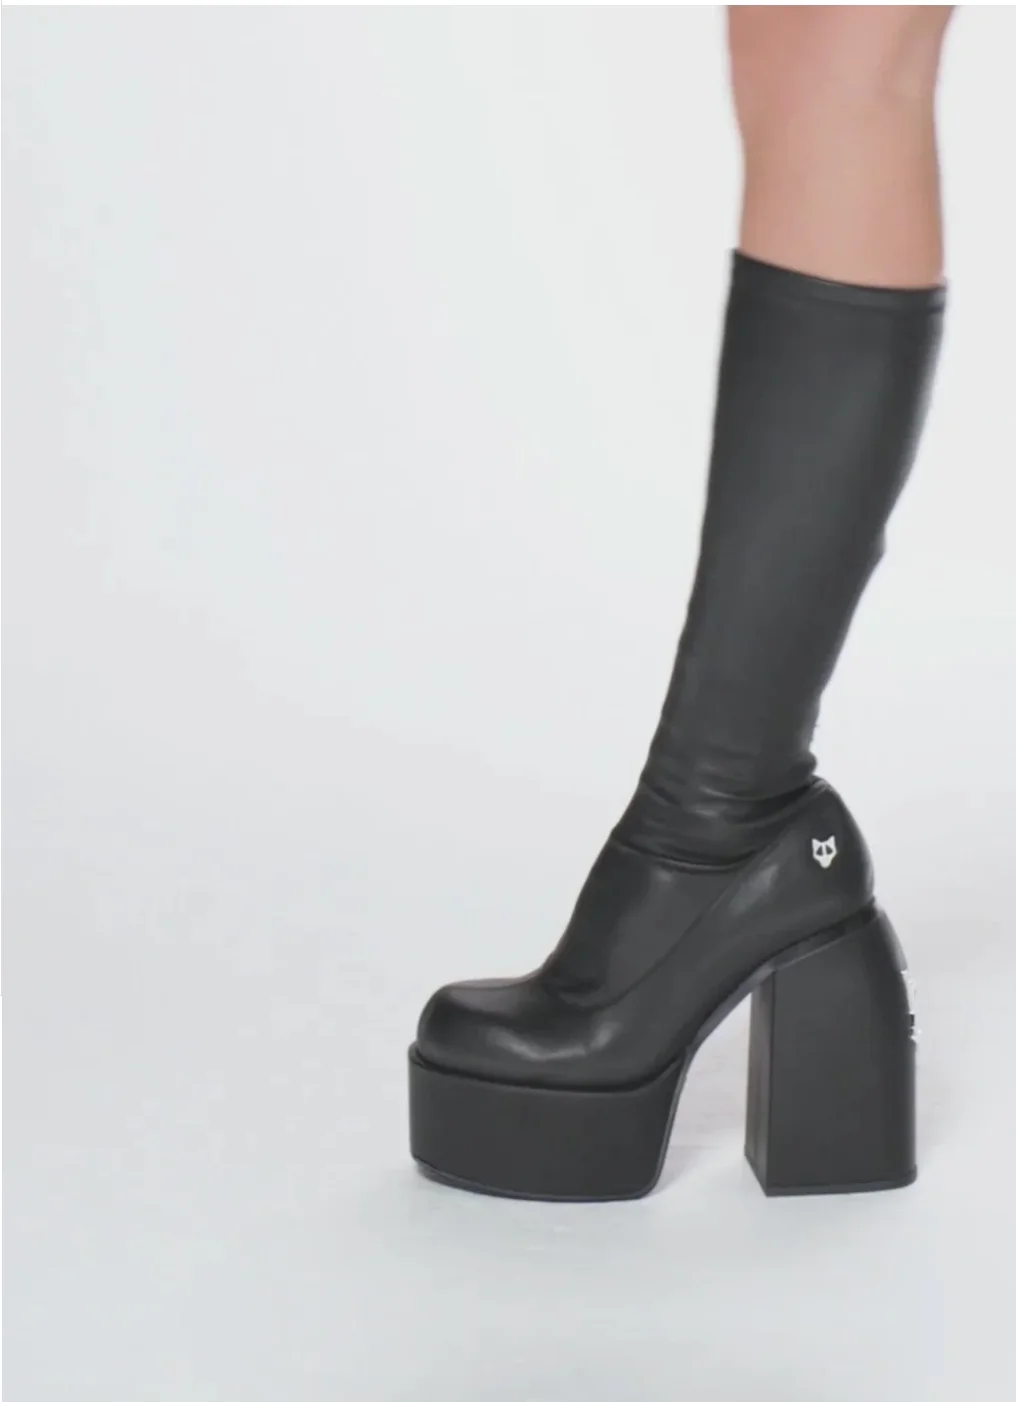 

Ladies high heels Naked Wolfe Spice Black Stretch Knee-High Boots Pull on design stretch platform fashion designer bootie shoes